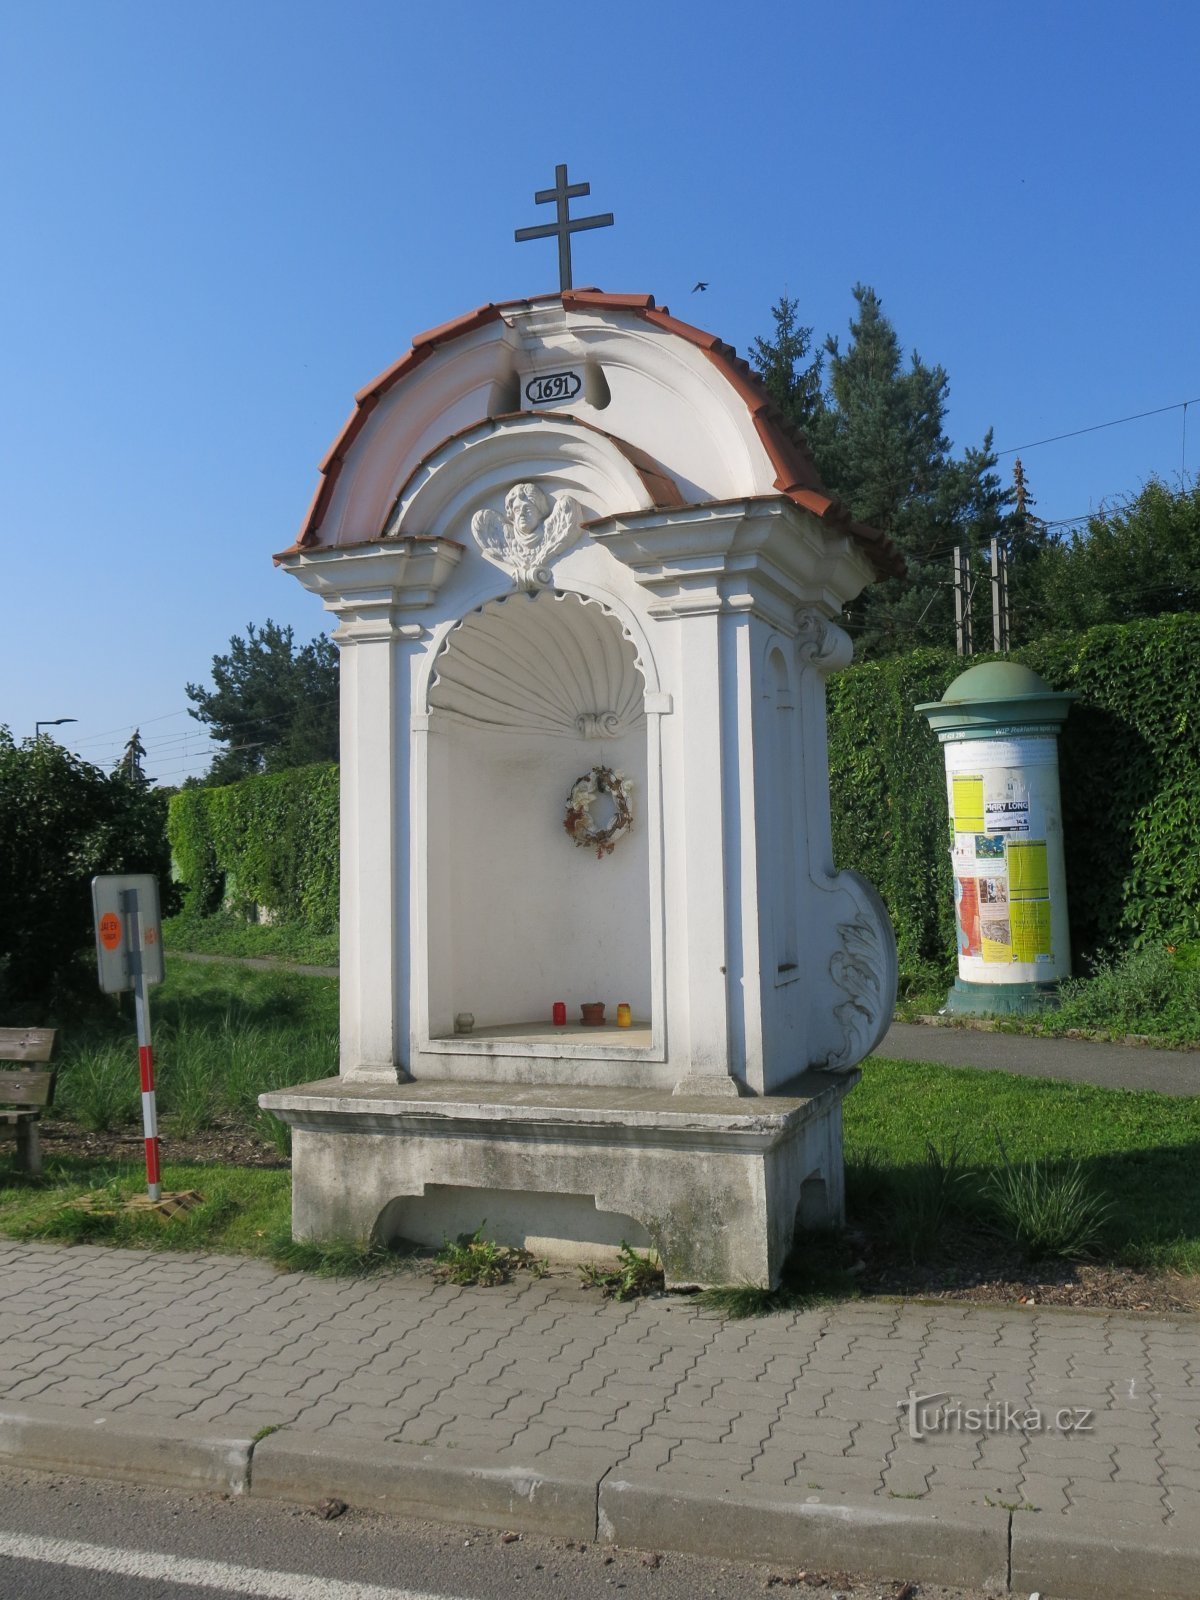 Planá nad Lužnicí - 聖マリア礼拝堂バーバラ